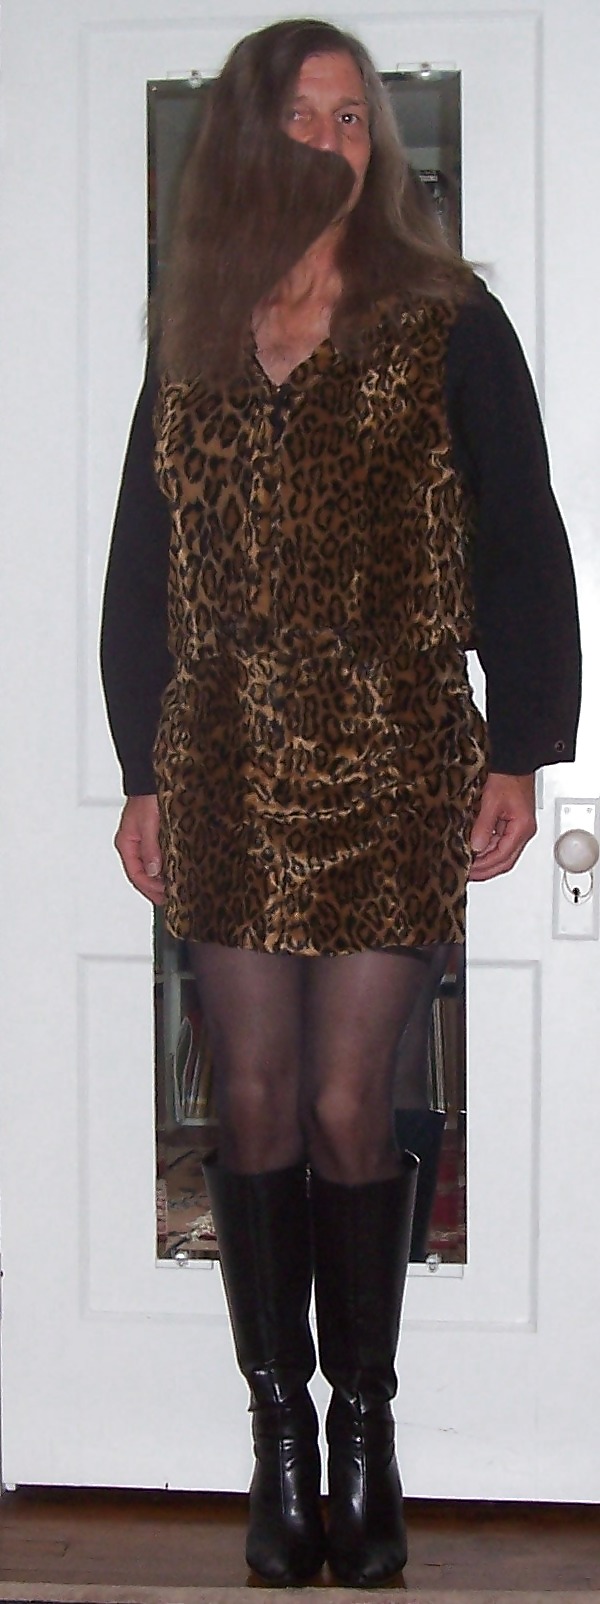 Leopard Girl - Puss'n Boots #19545047